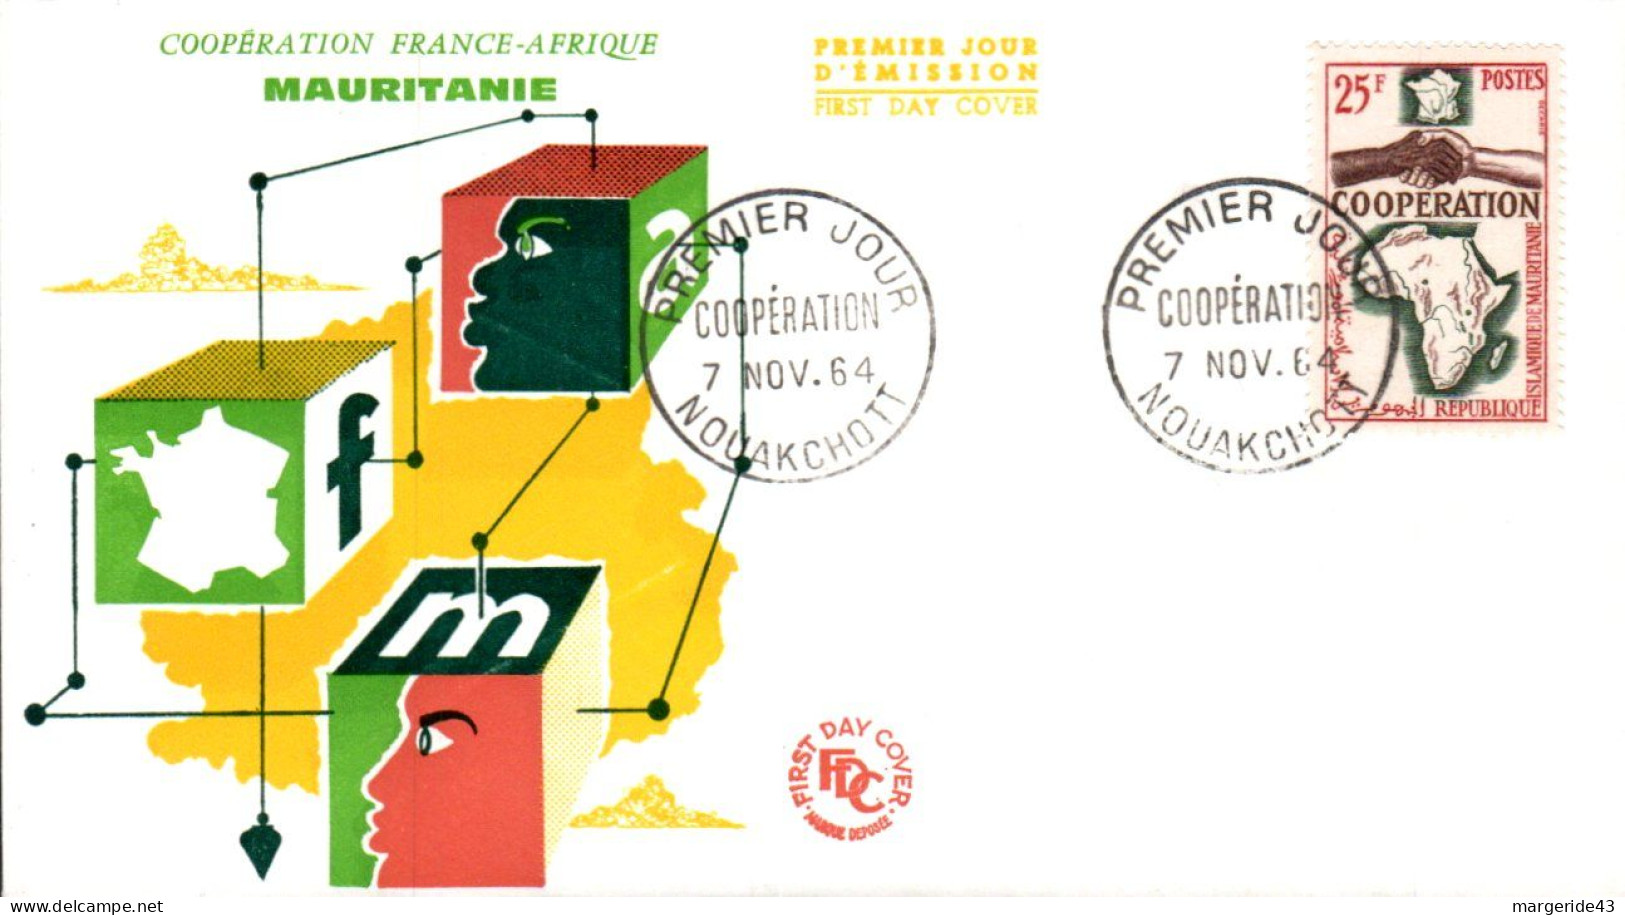 MAURITANIE  FDC 1964 COOPERATION - Mauritanie (1960-...)